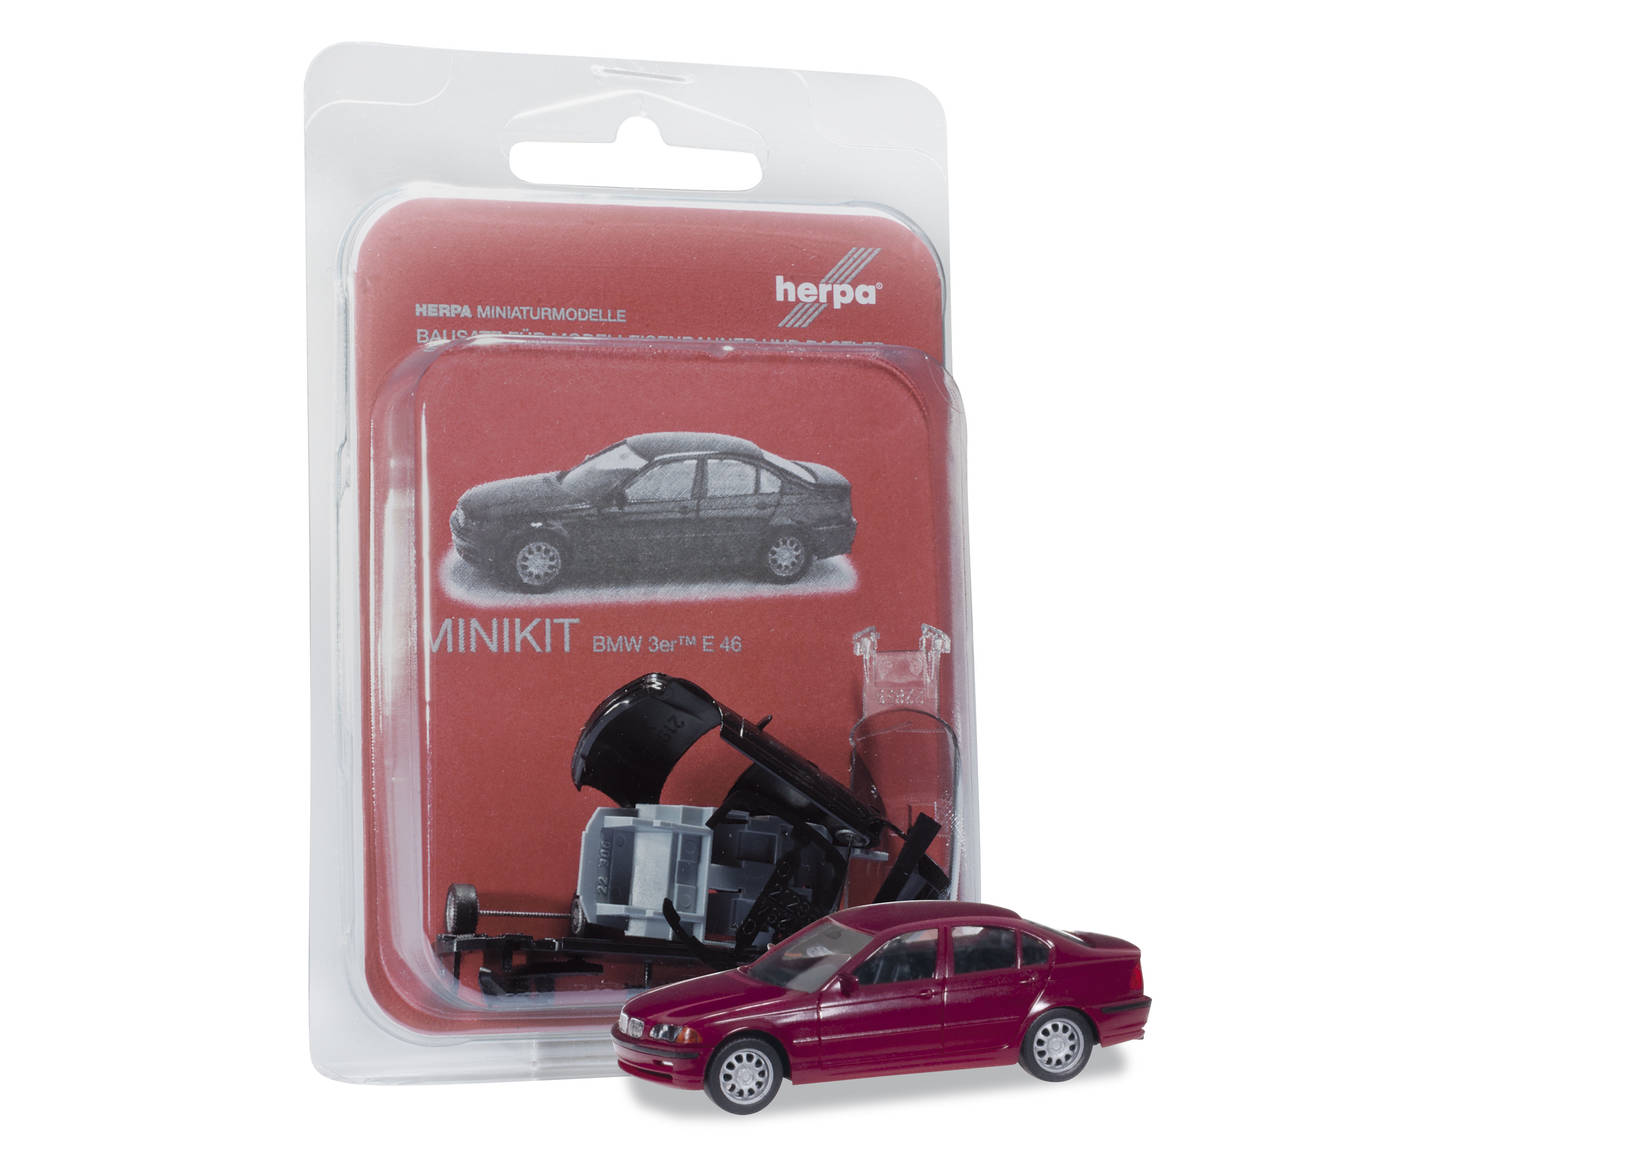 Herpa MiniKit: BMW 3er Limousine E46, wine red